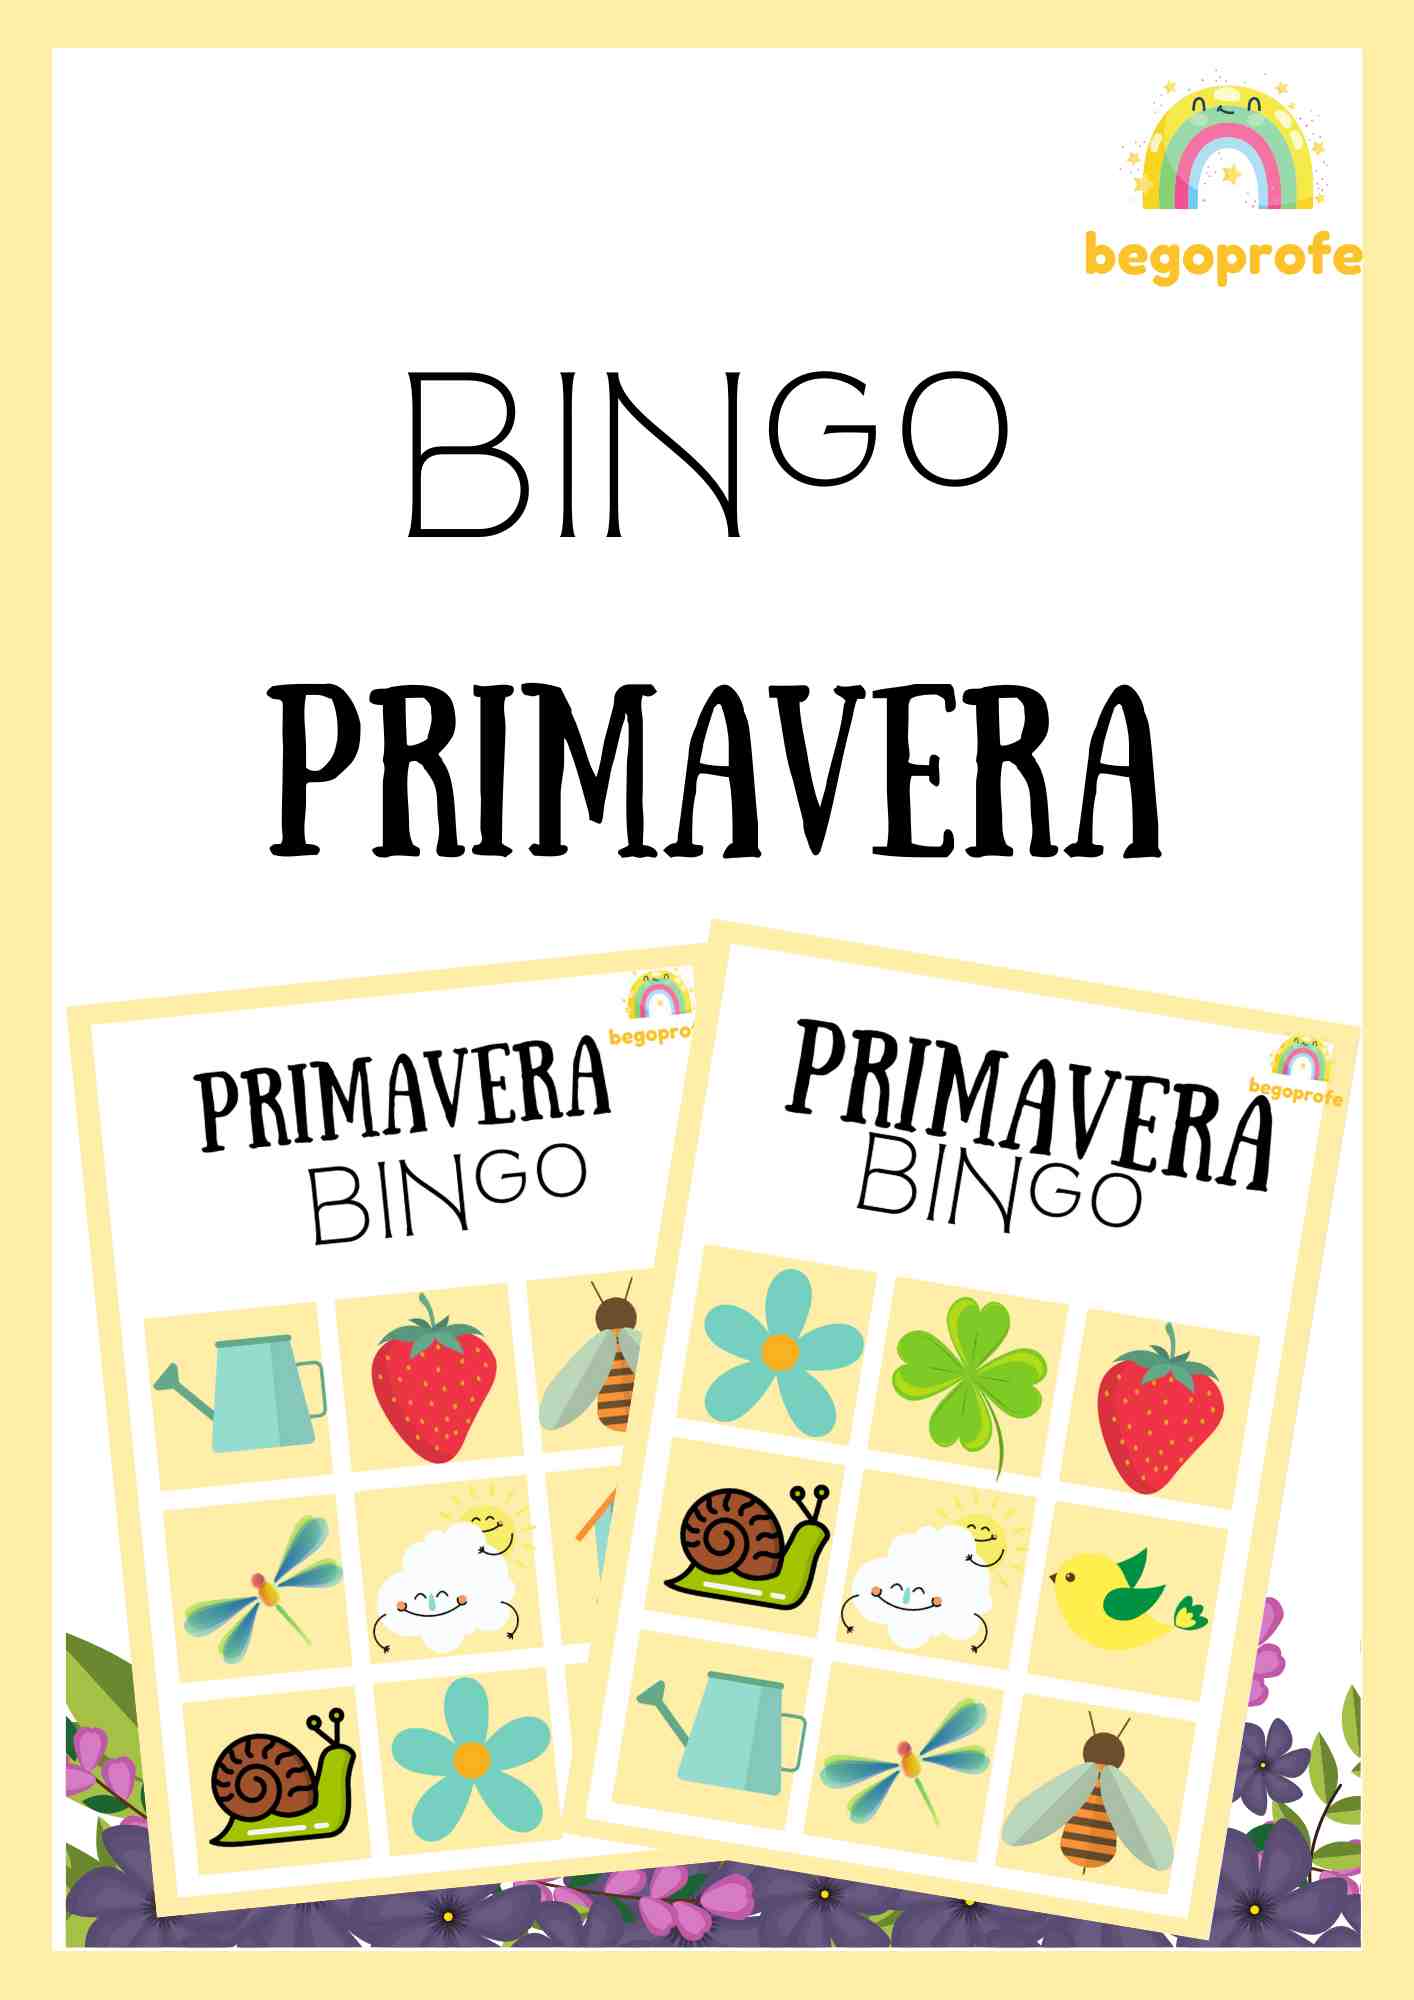 Bingo de primavera - Spring bingo game